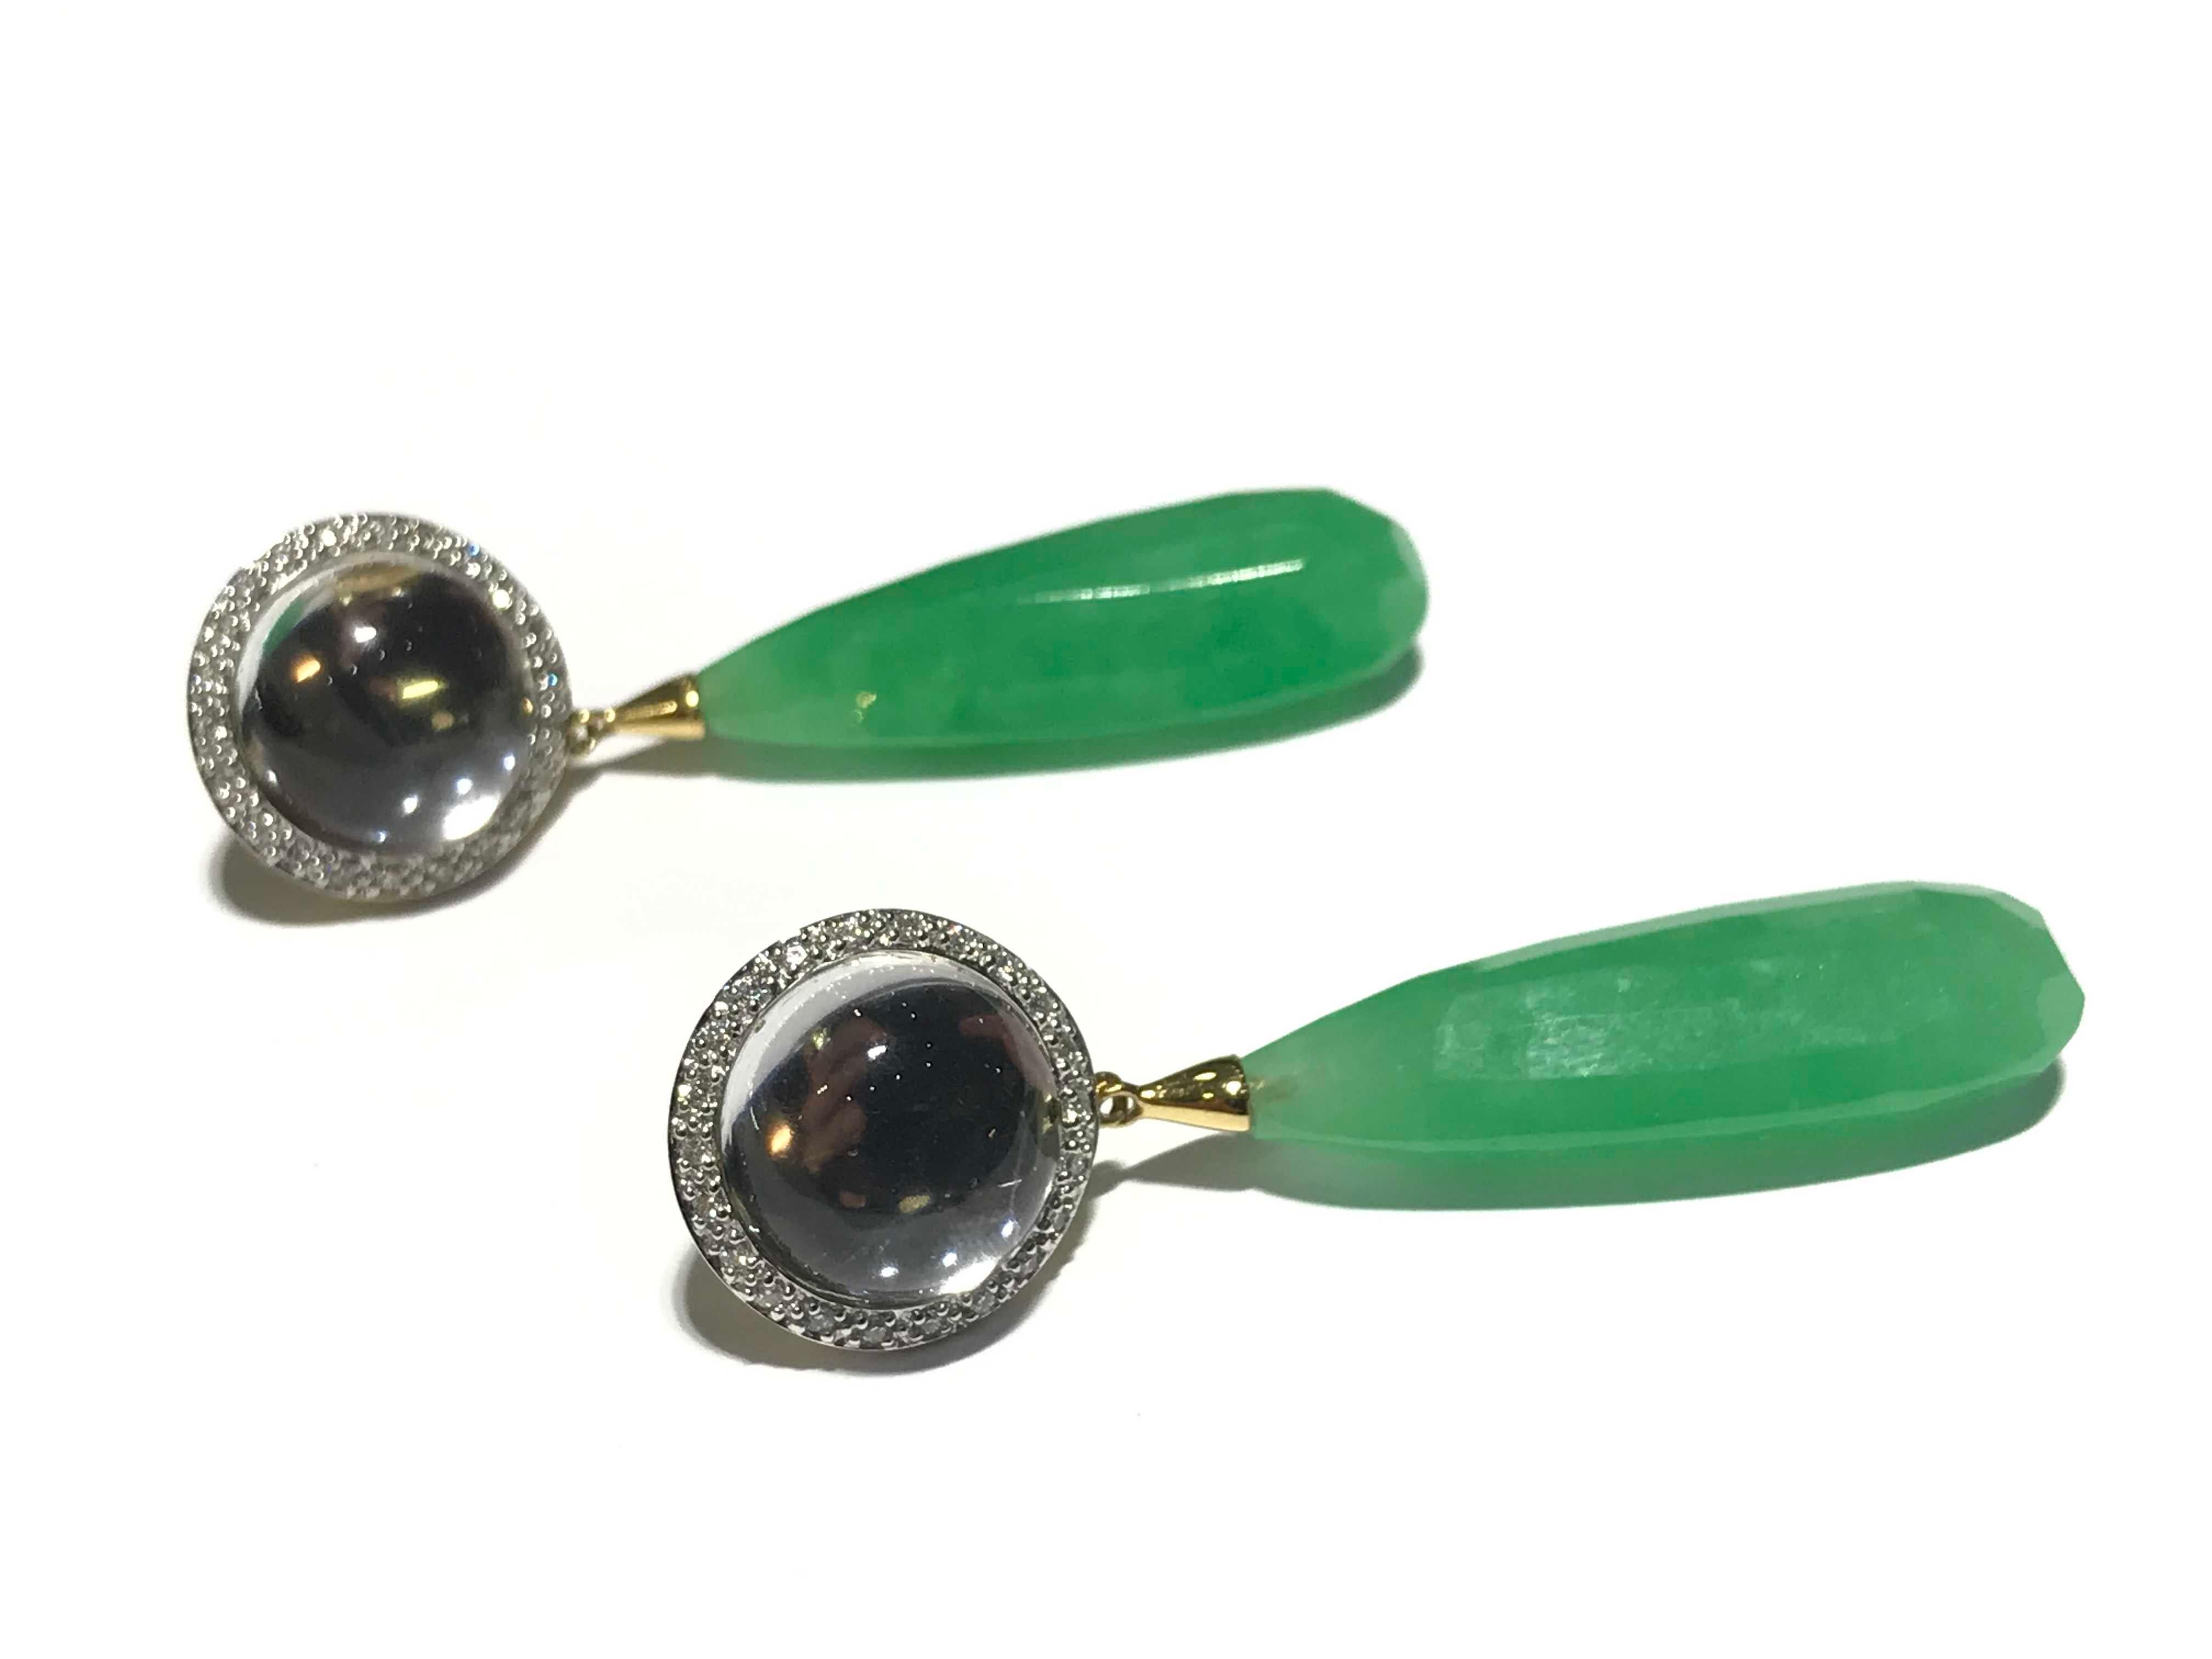 MIMI Green Jade Shan Teki drop earrings with diamond Halo 
0.22 carat diamond halo 
Drop Earrings in 18 karat w/g & y/g